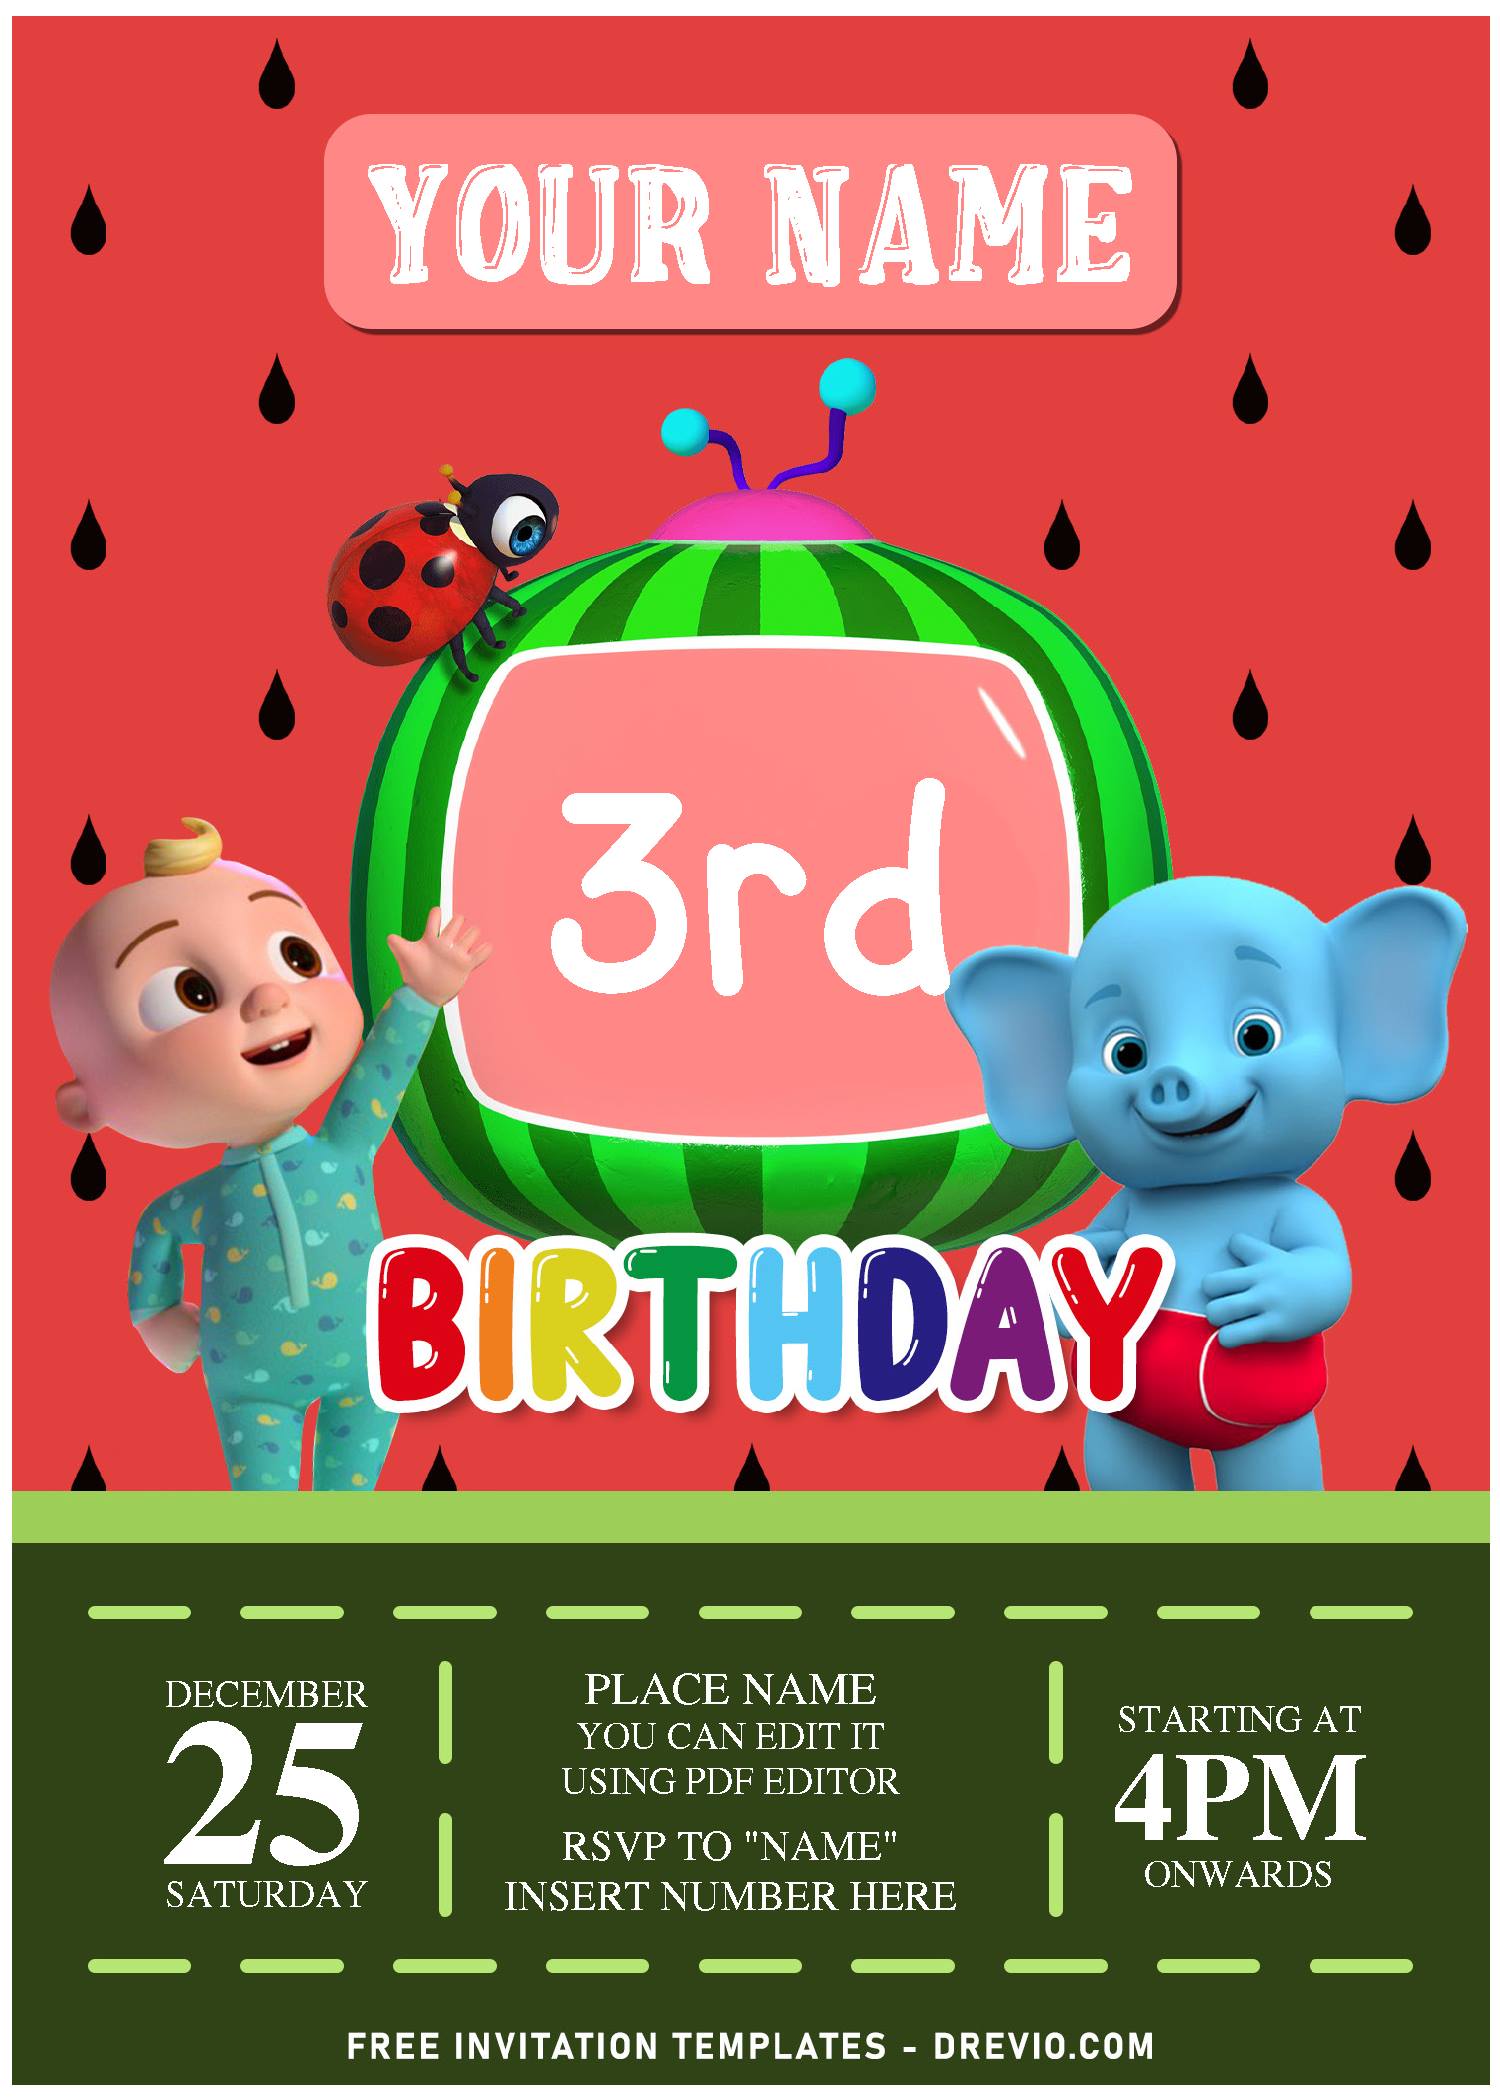 Coco Melon Family 1st Birthday Invitation Card Blue Theme